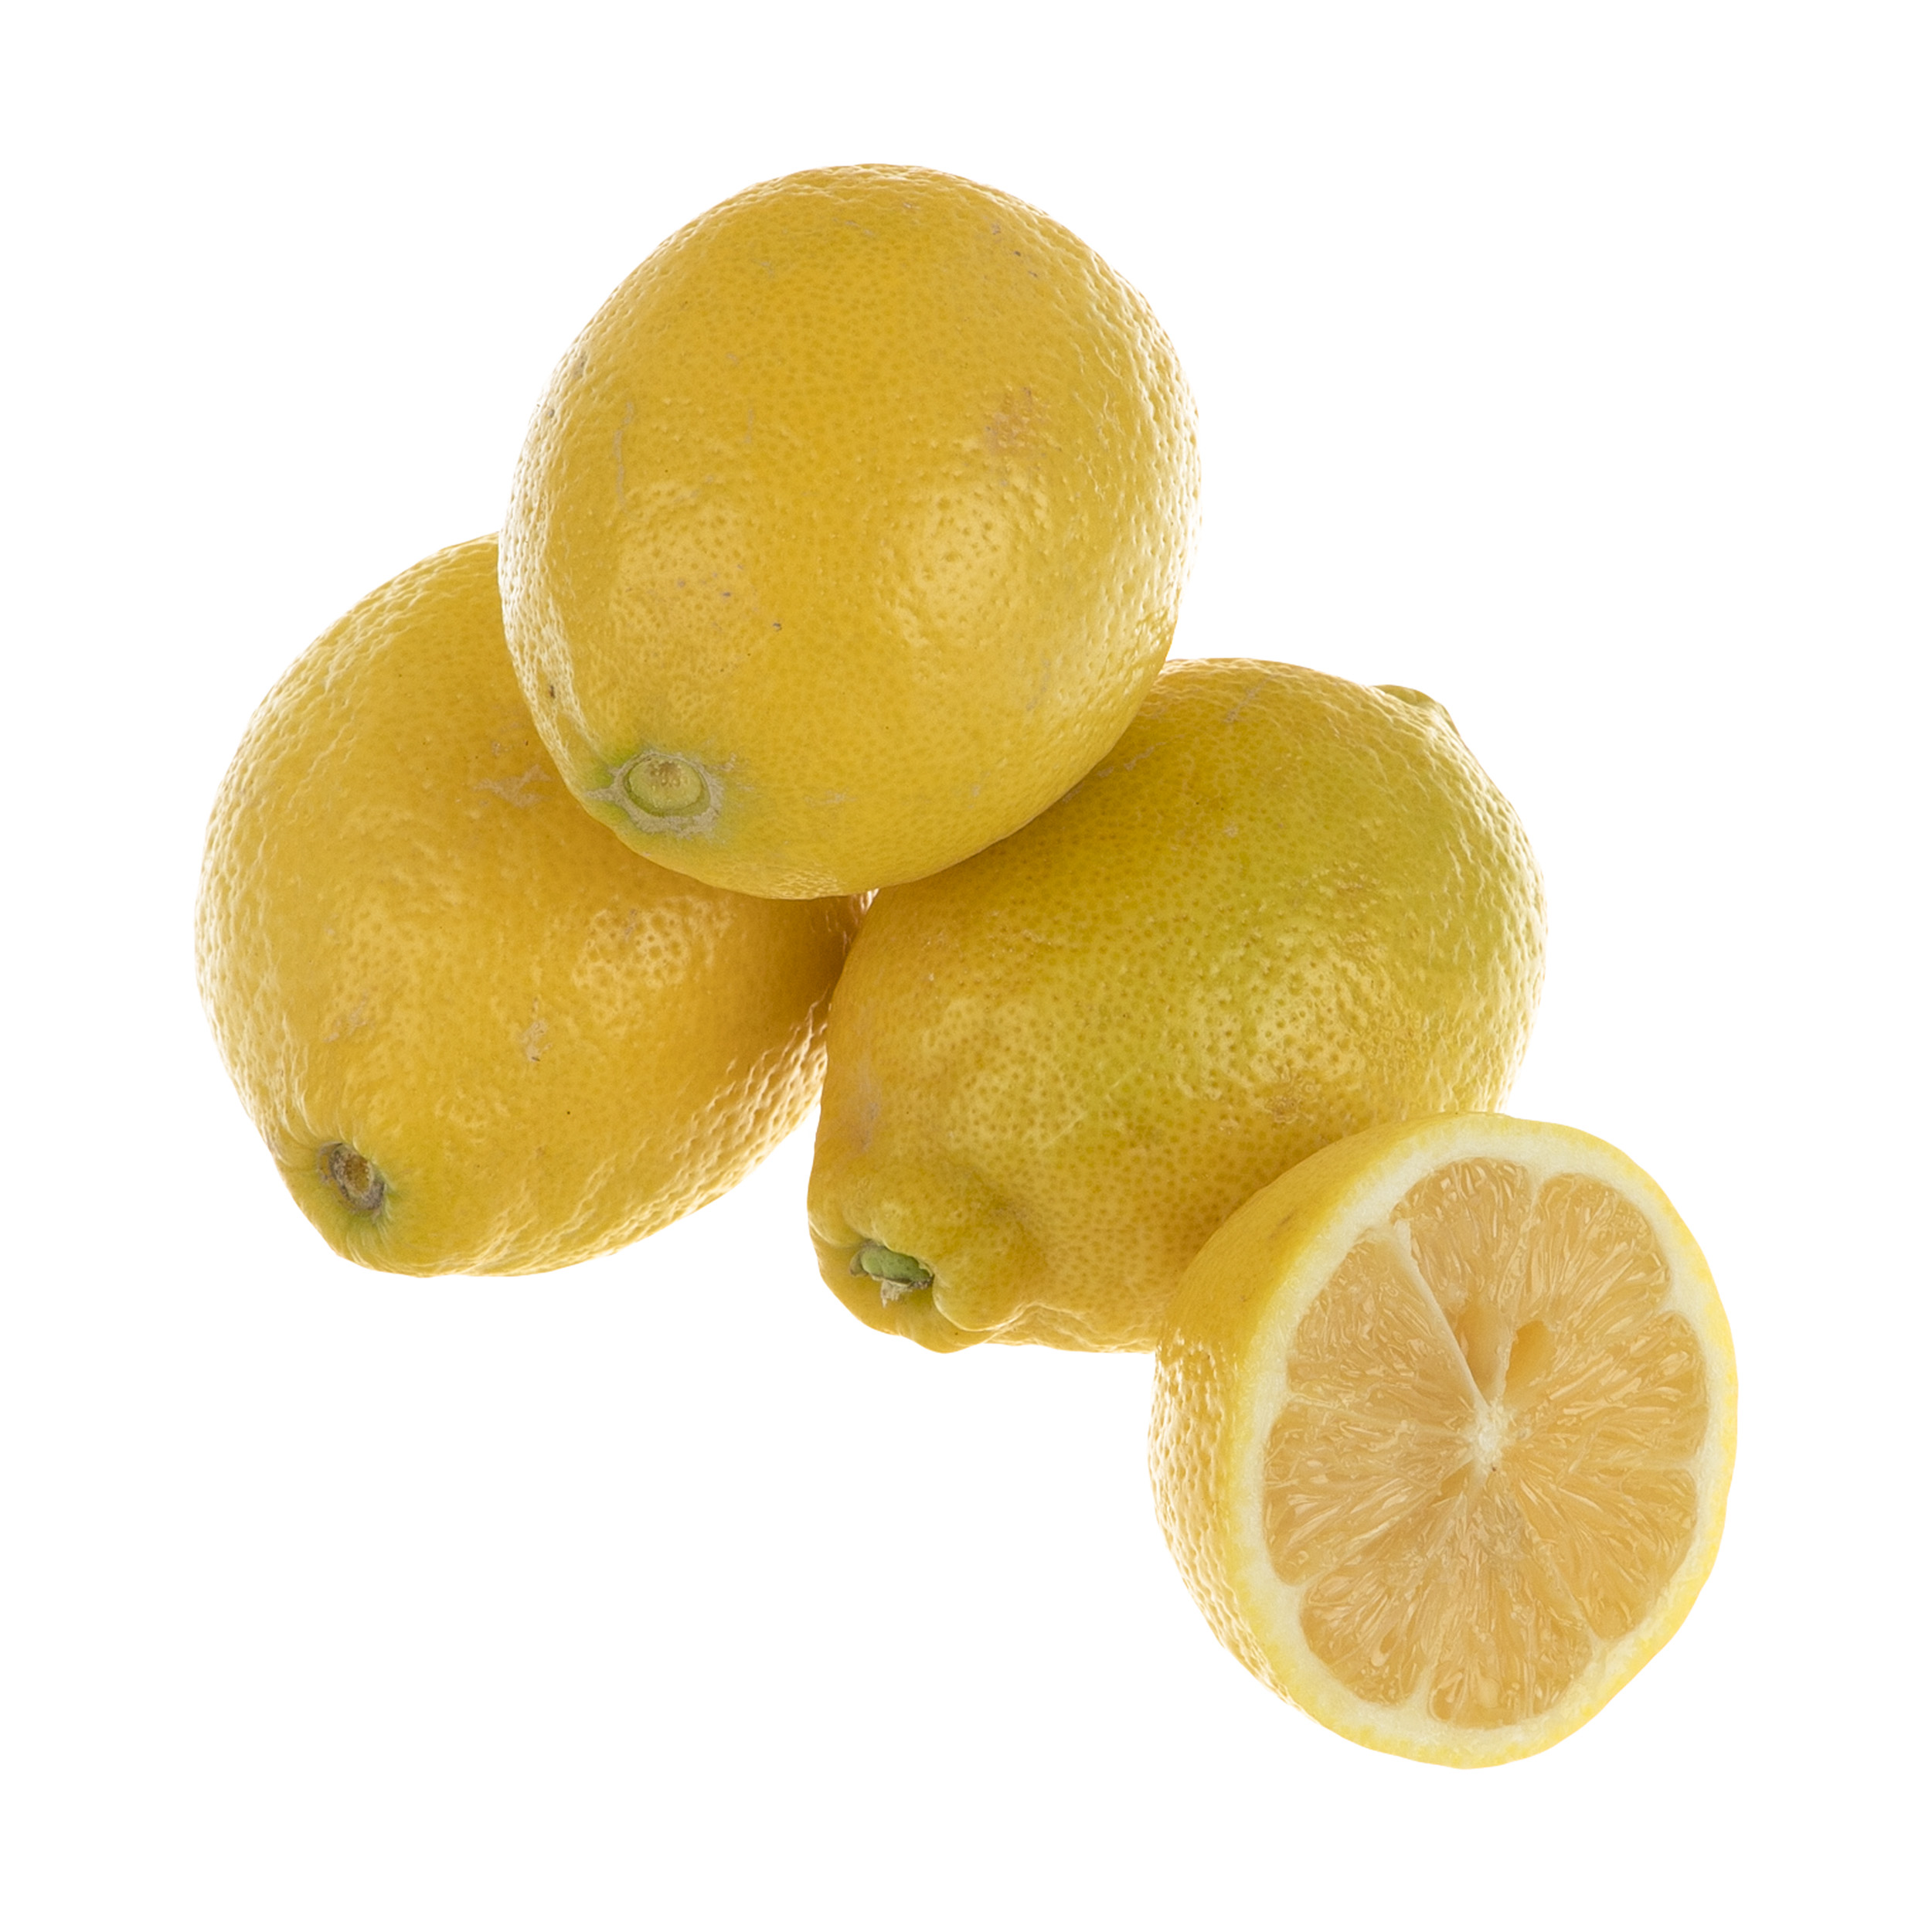 لیمو ترش سنگی درجه یک - 2 کیلوگرم